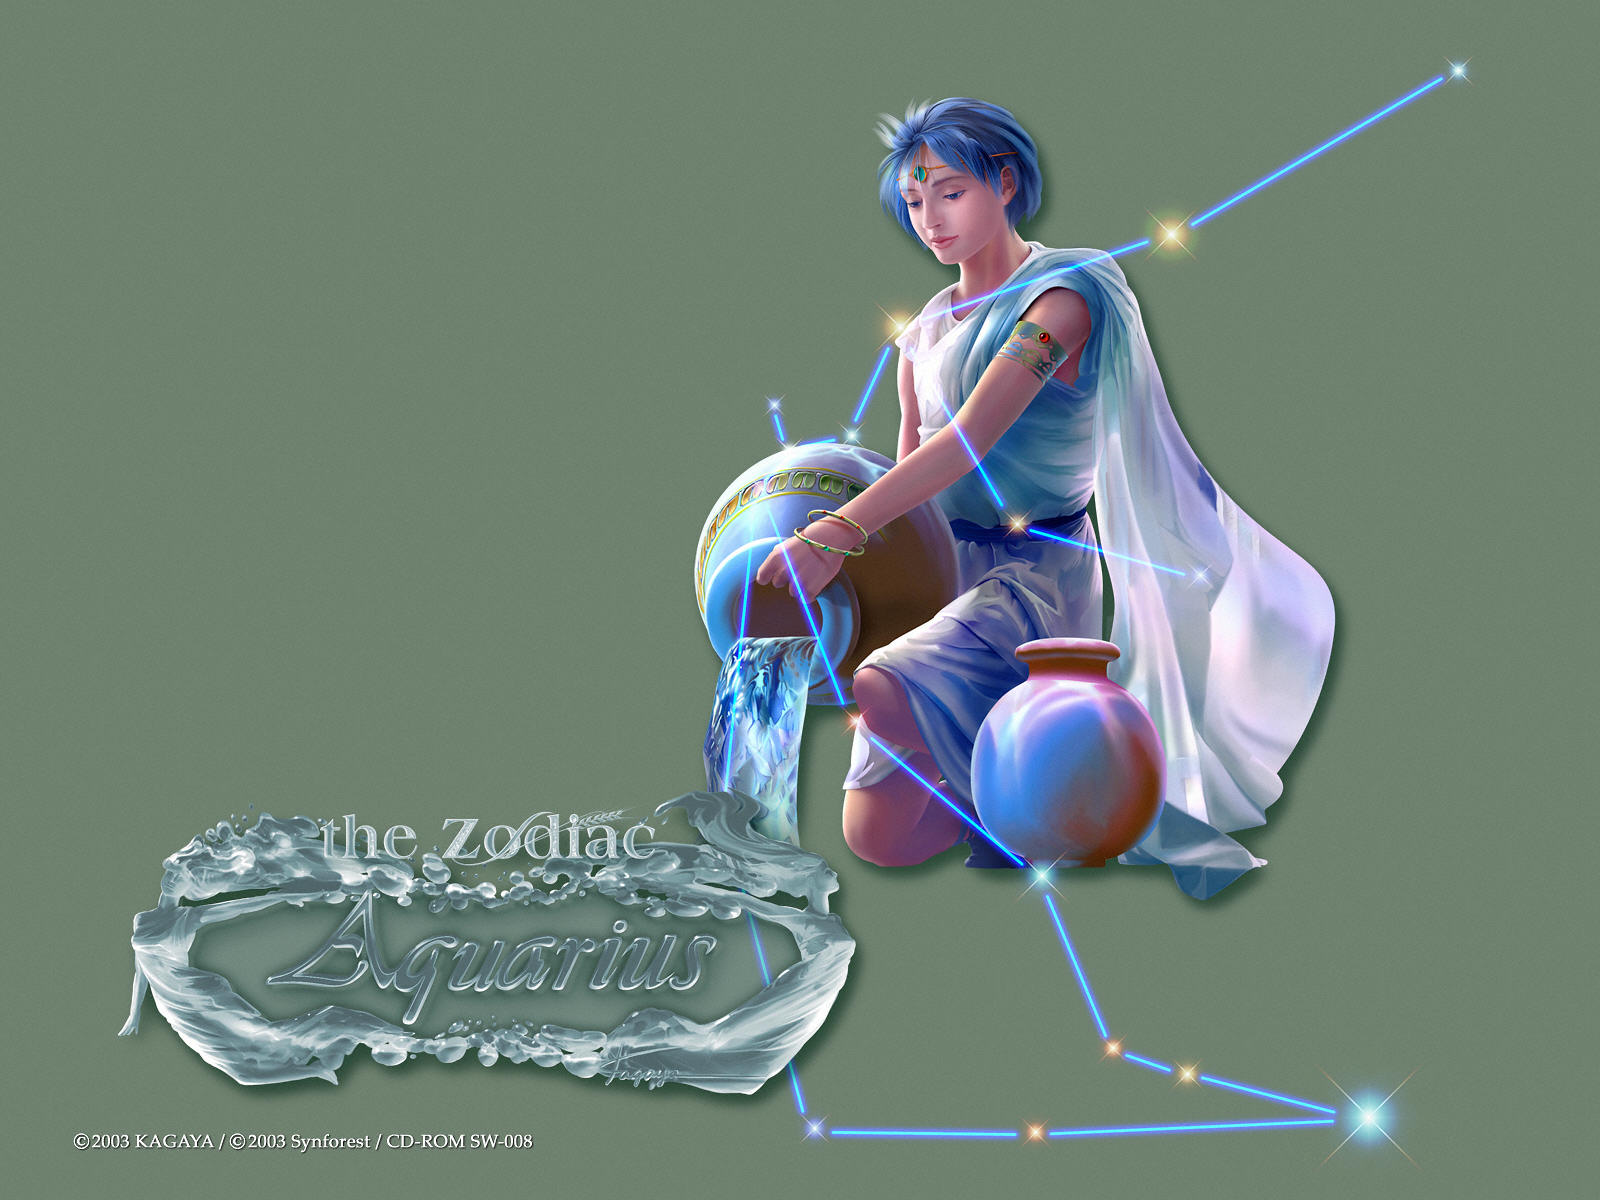 Download High quality Constellation Aquarius The Zodiac wallpaper / 1600x1200